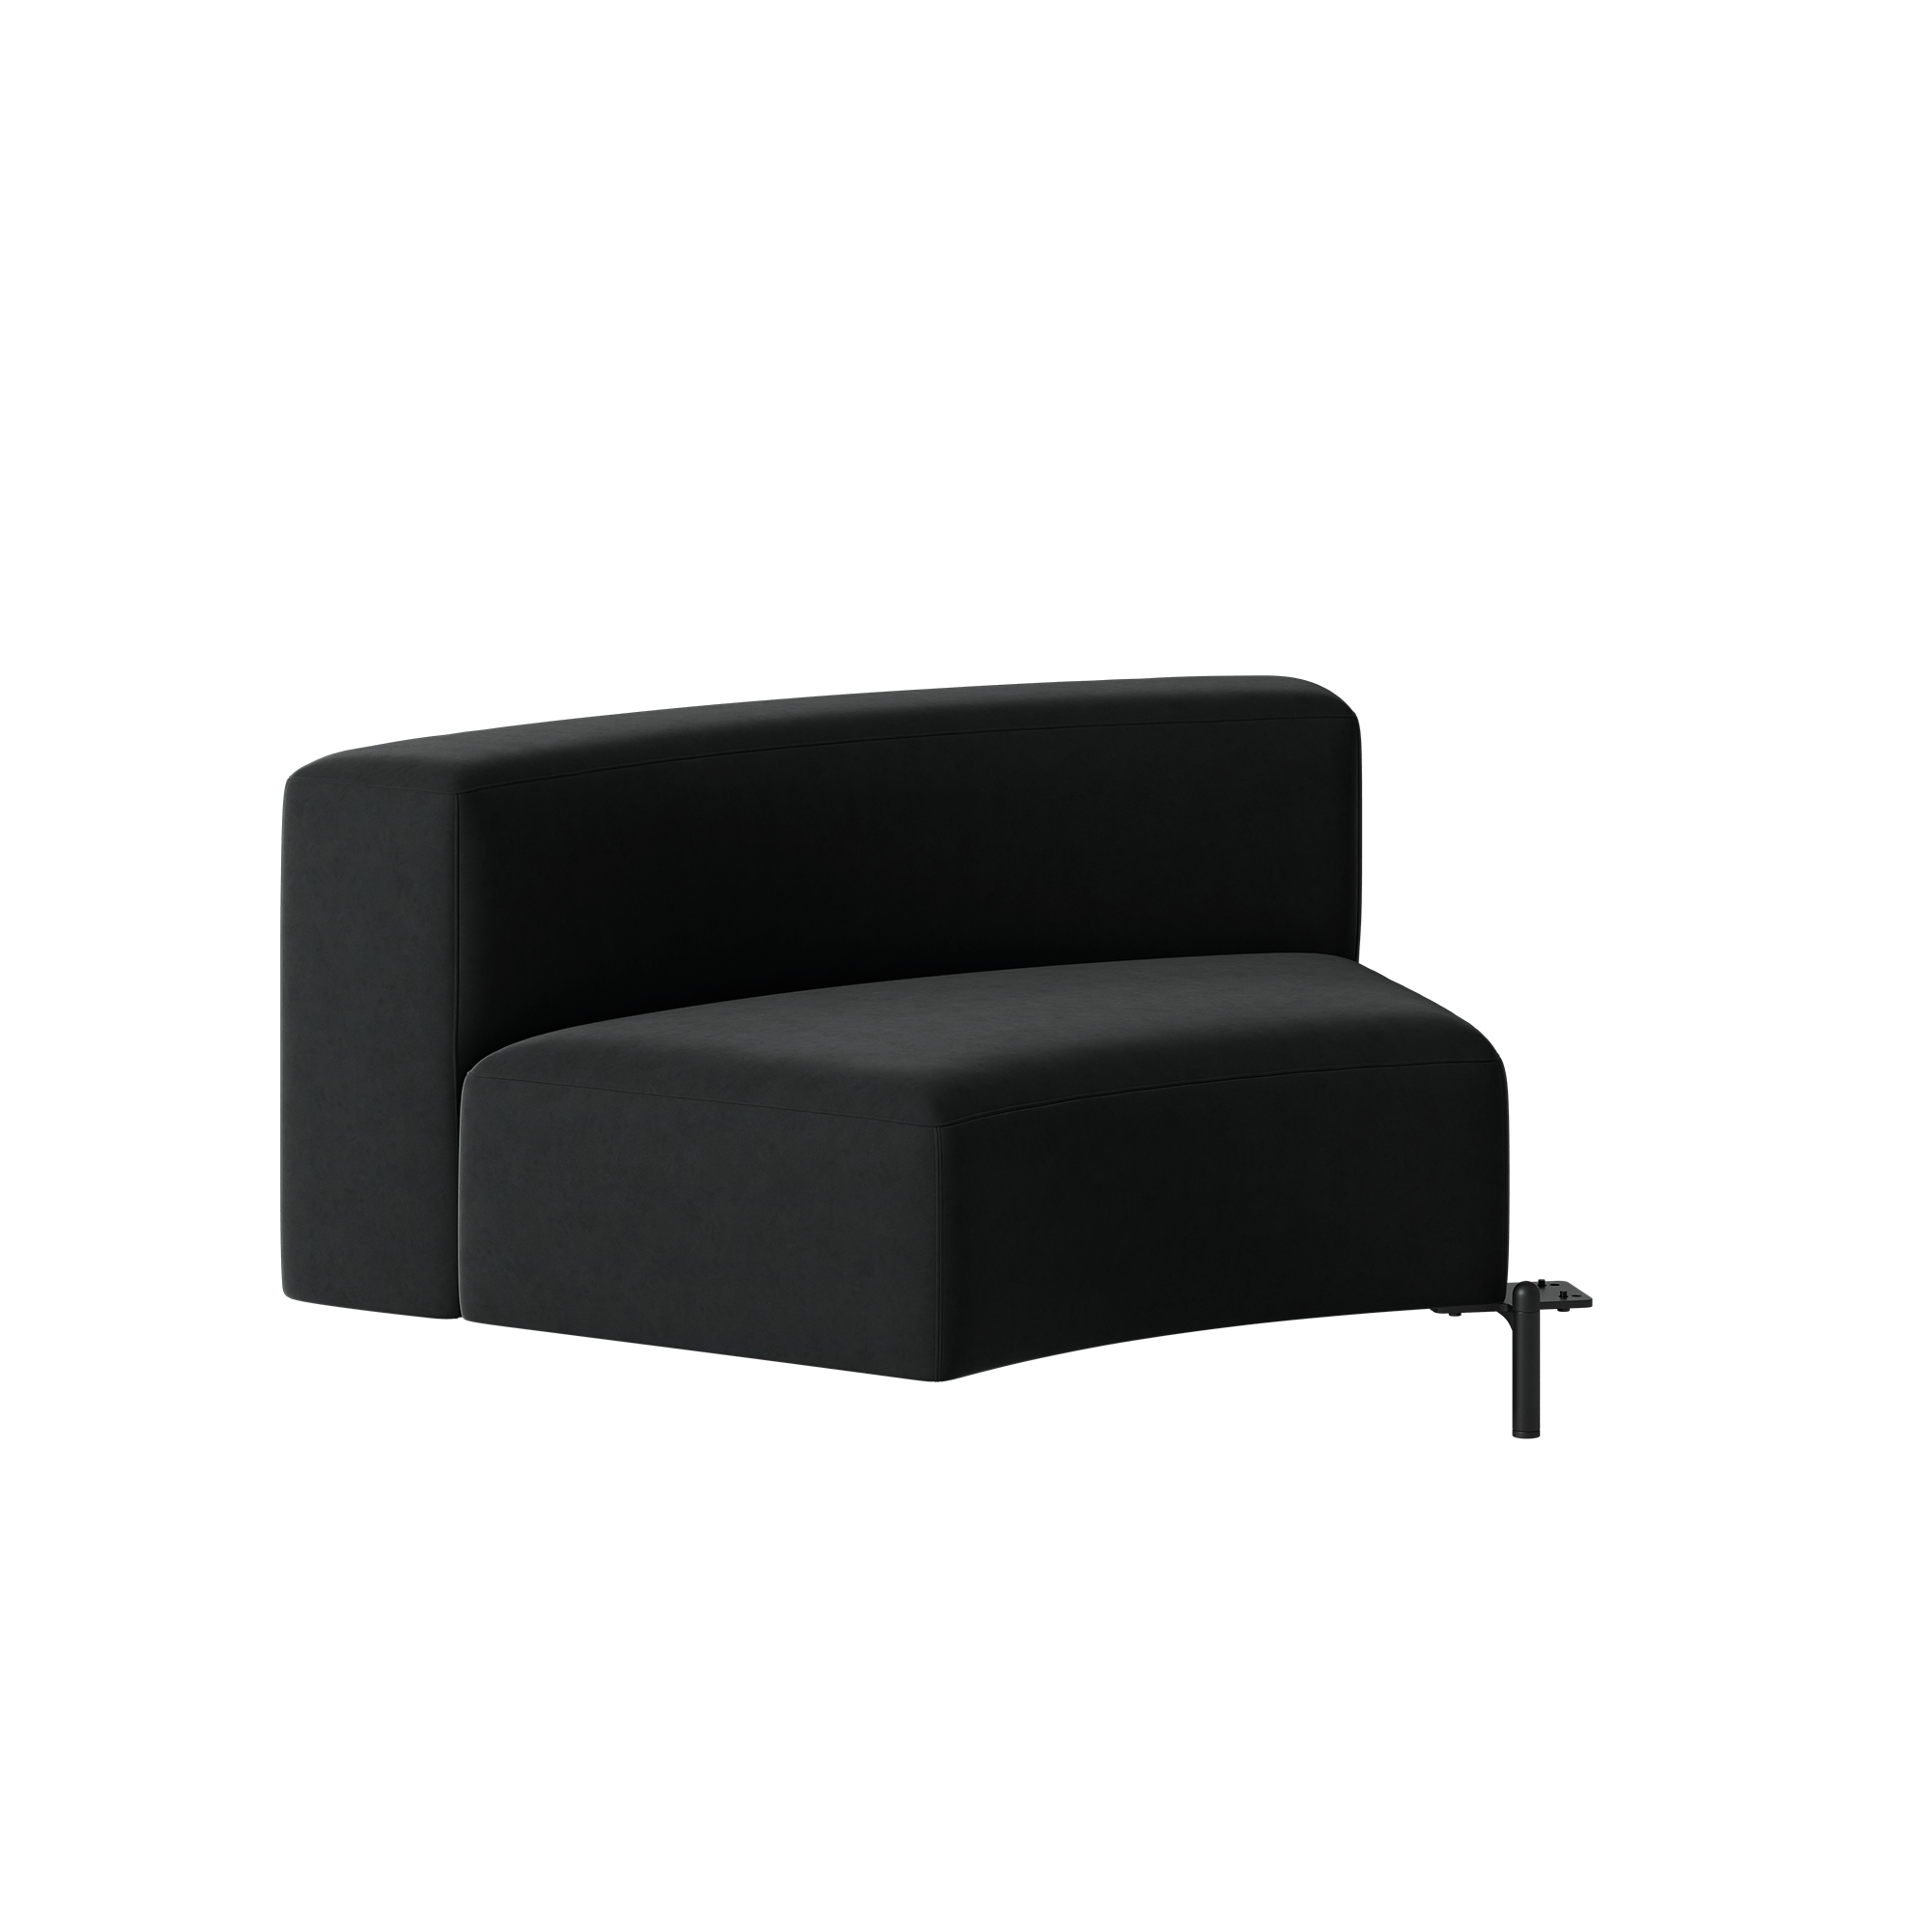 A black lounge chair